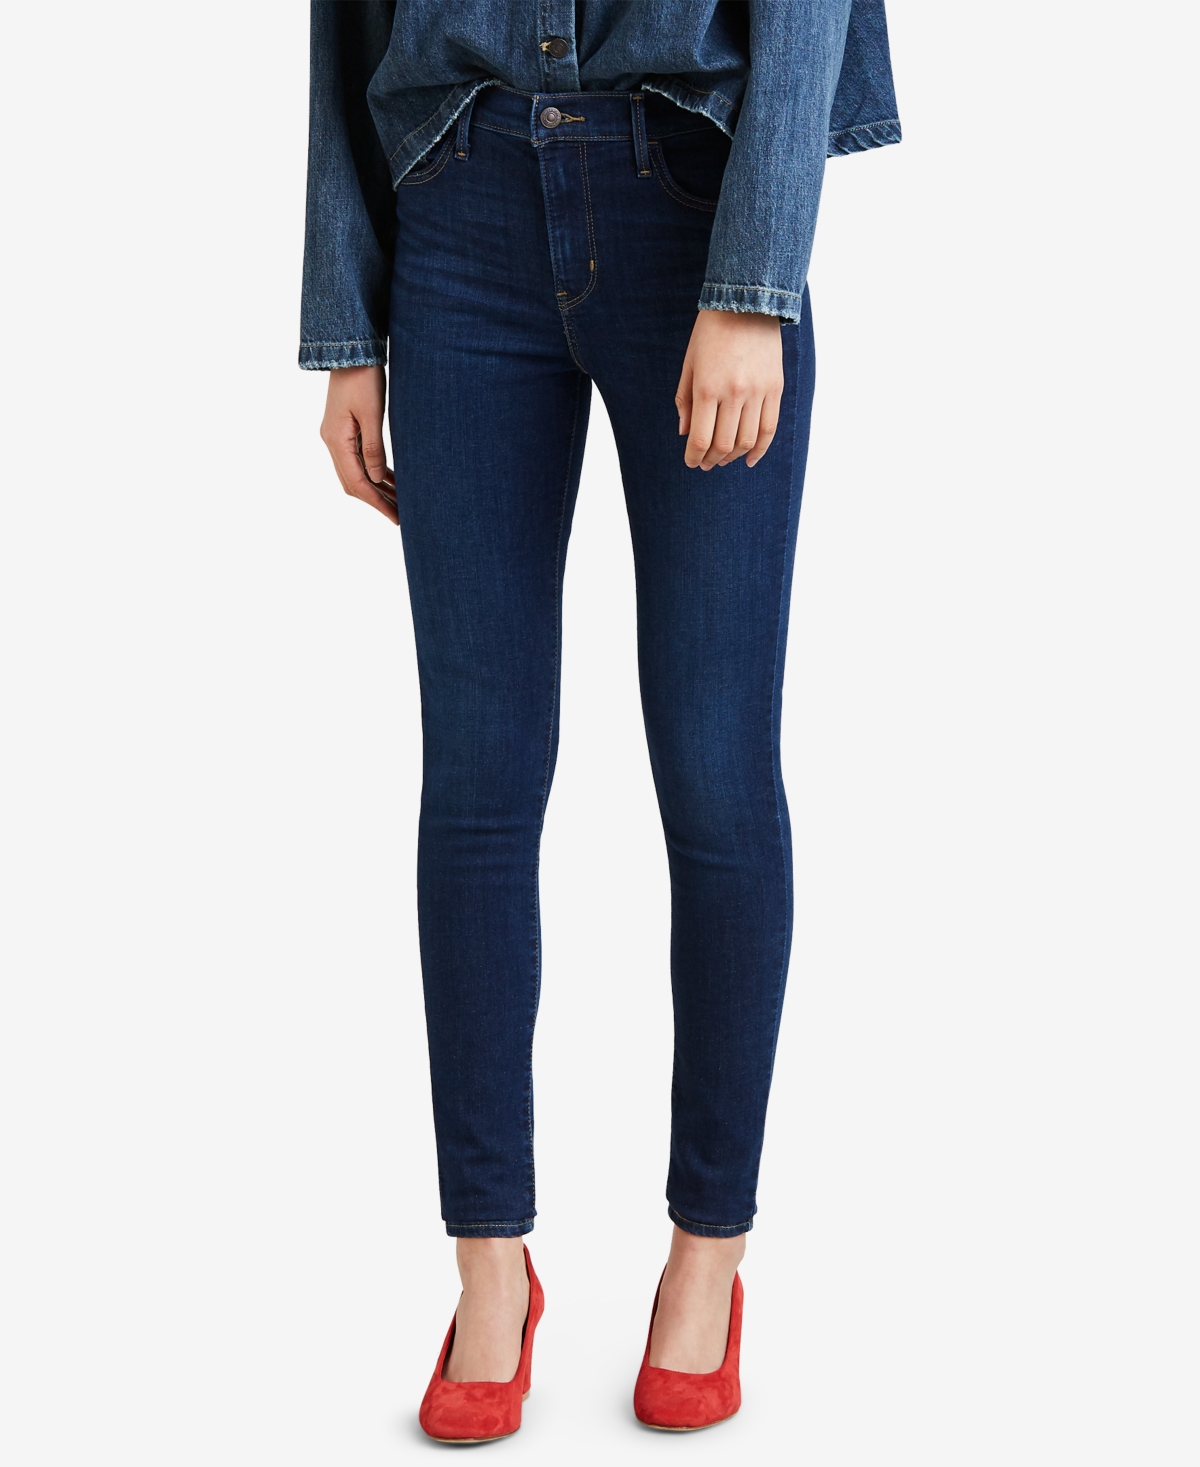 Women's 720 High-Rise Stretchy Super-Skinny Jeans in Extra Short Length - Indigo Daze